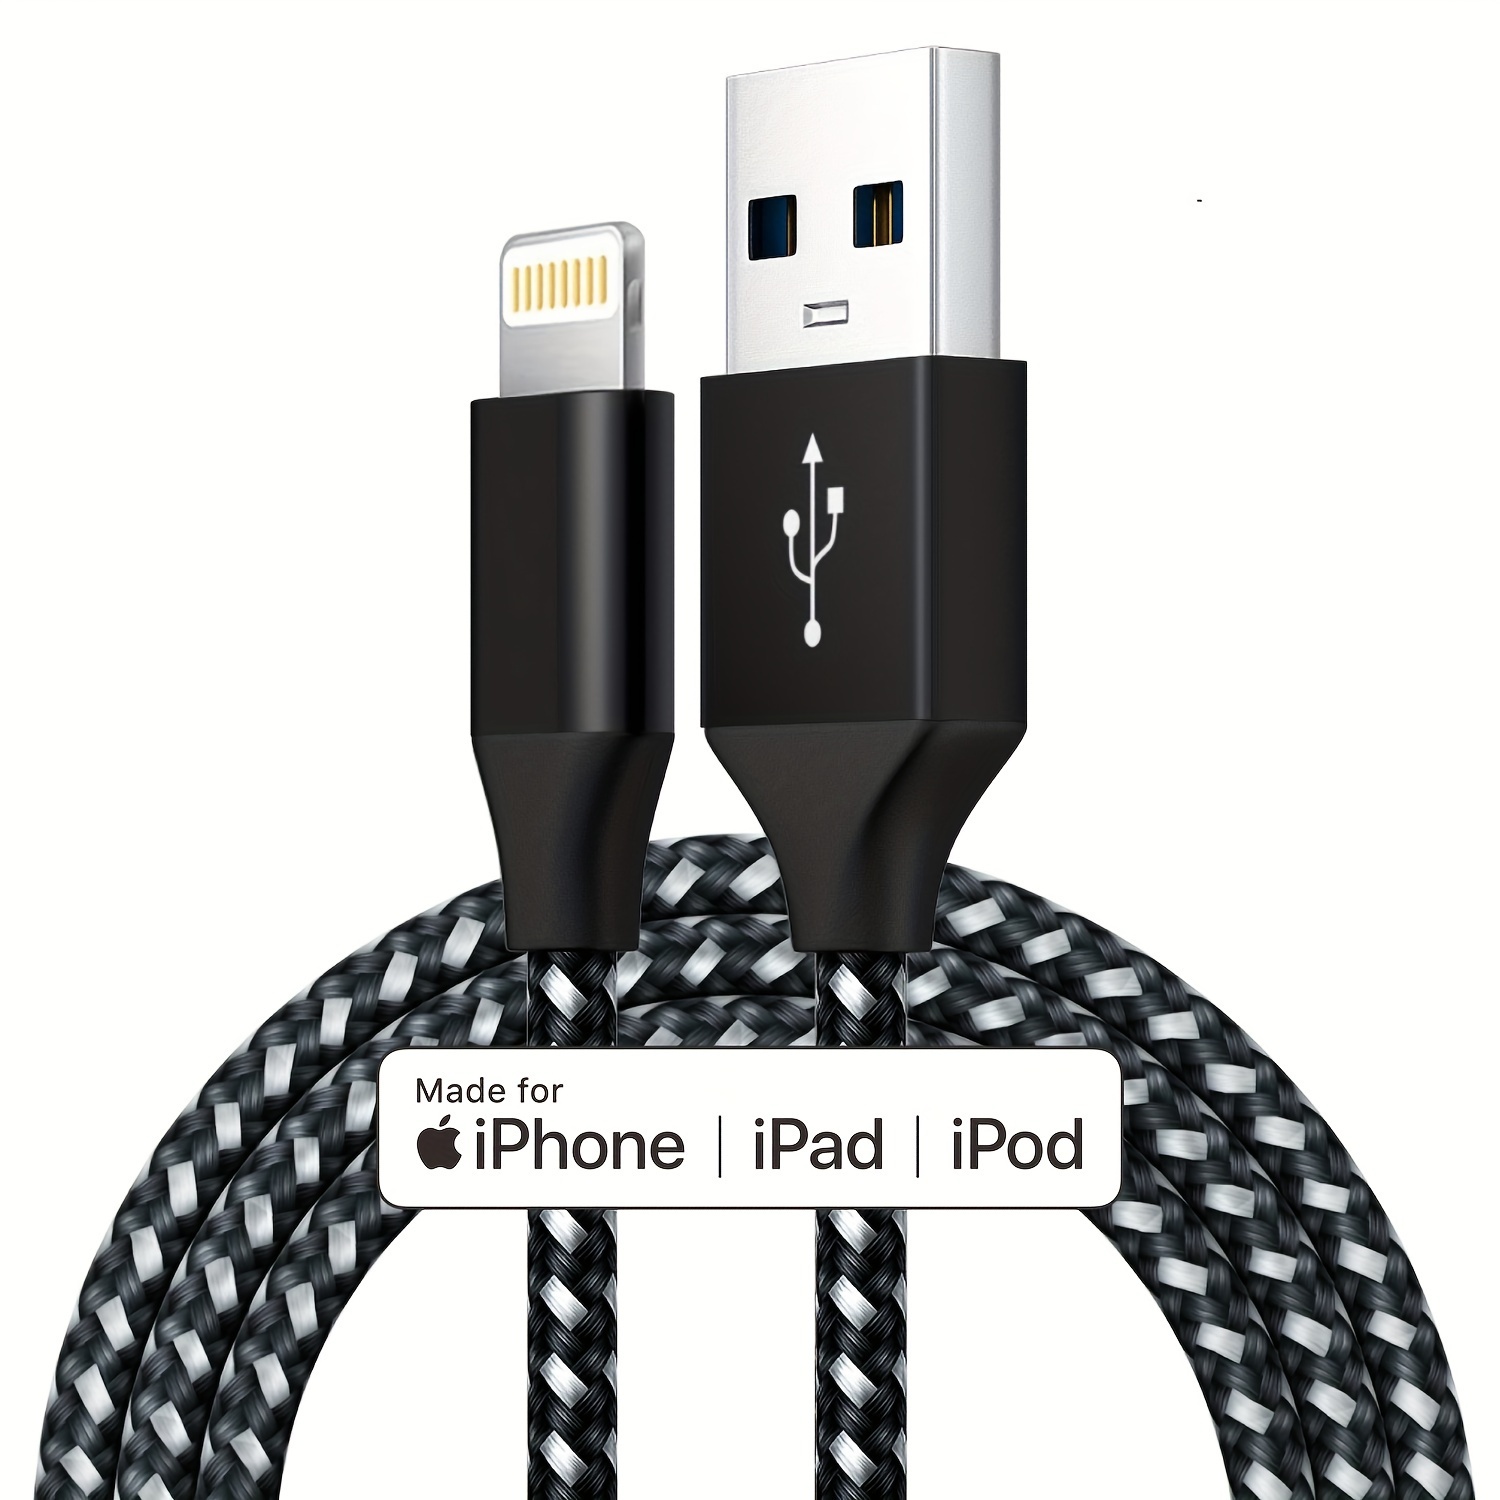  Cargador original de Apple [certificado Apple MFi] Cable  Lightning a USB compatible con iPhone Xs Max/Xr/Xs/X/8/7/6s/6plus/5s, iPad  Pro/Air/Mini, iPod Touch (blanco 1M/3.3 pies) certificado original :  Electrónica